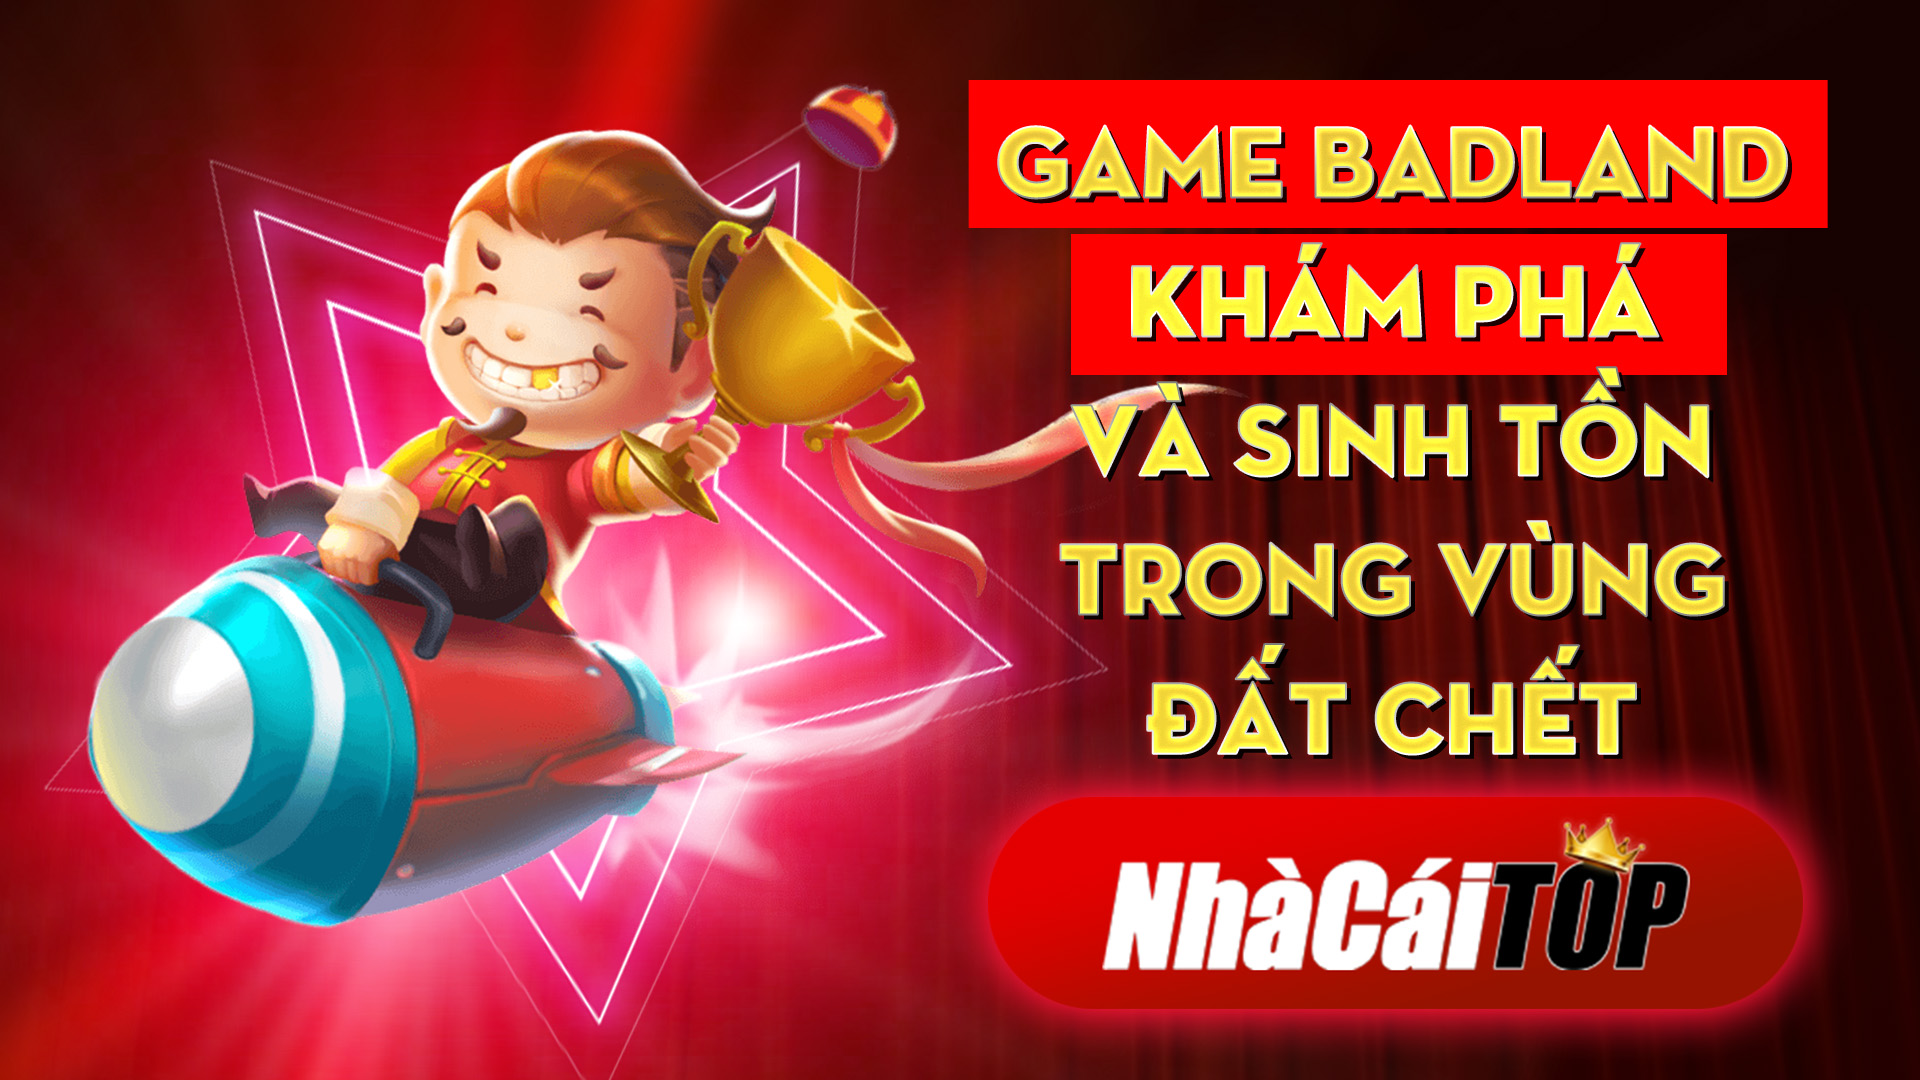 355 Game Badland – Kham Pha Va Sinh Ton Trong Vung Djat Chet